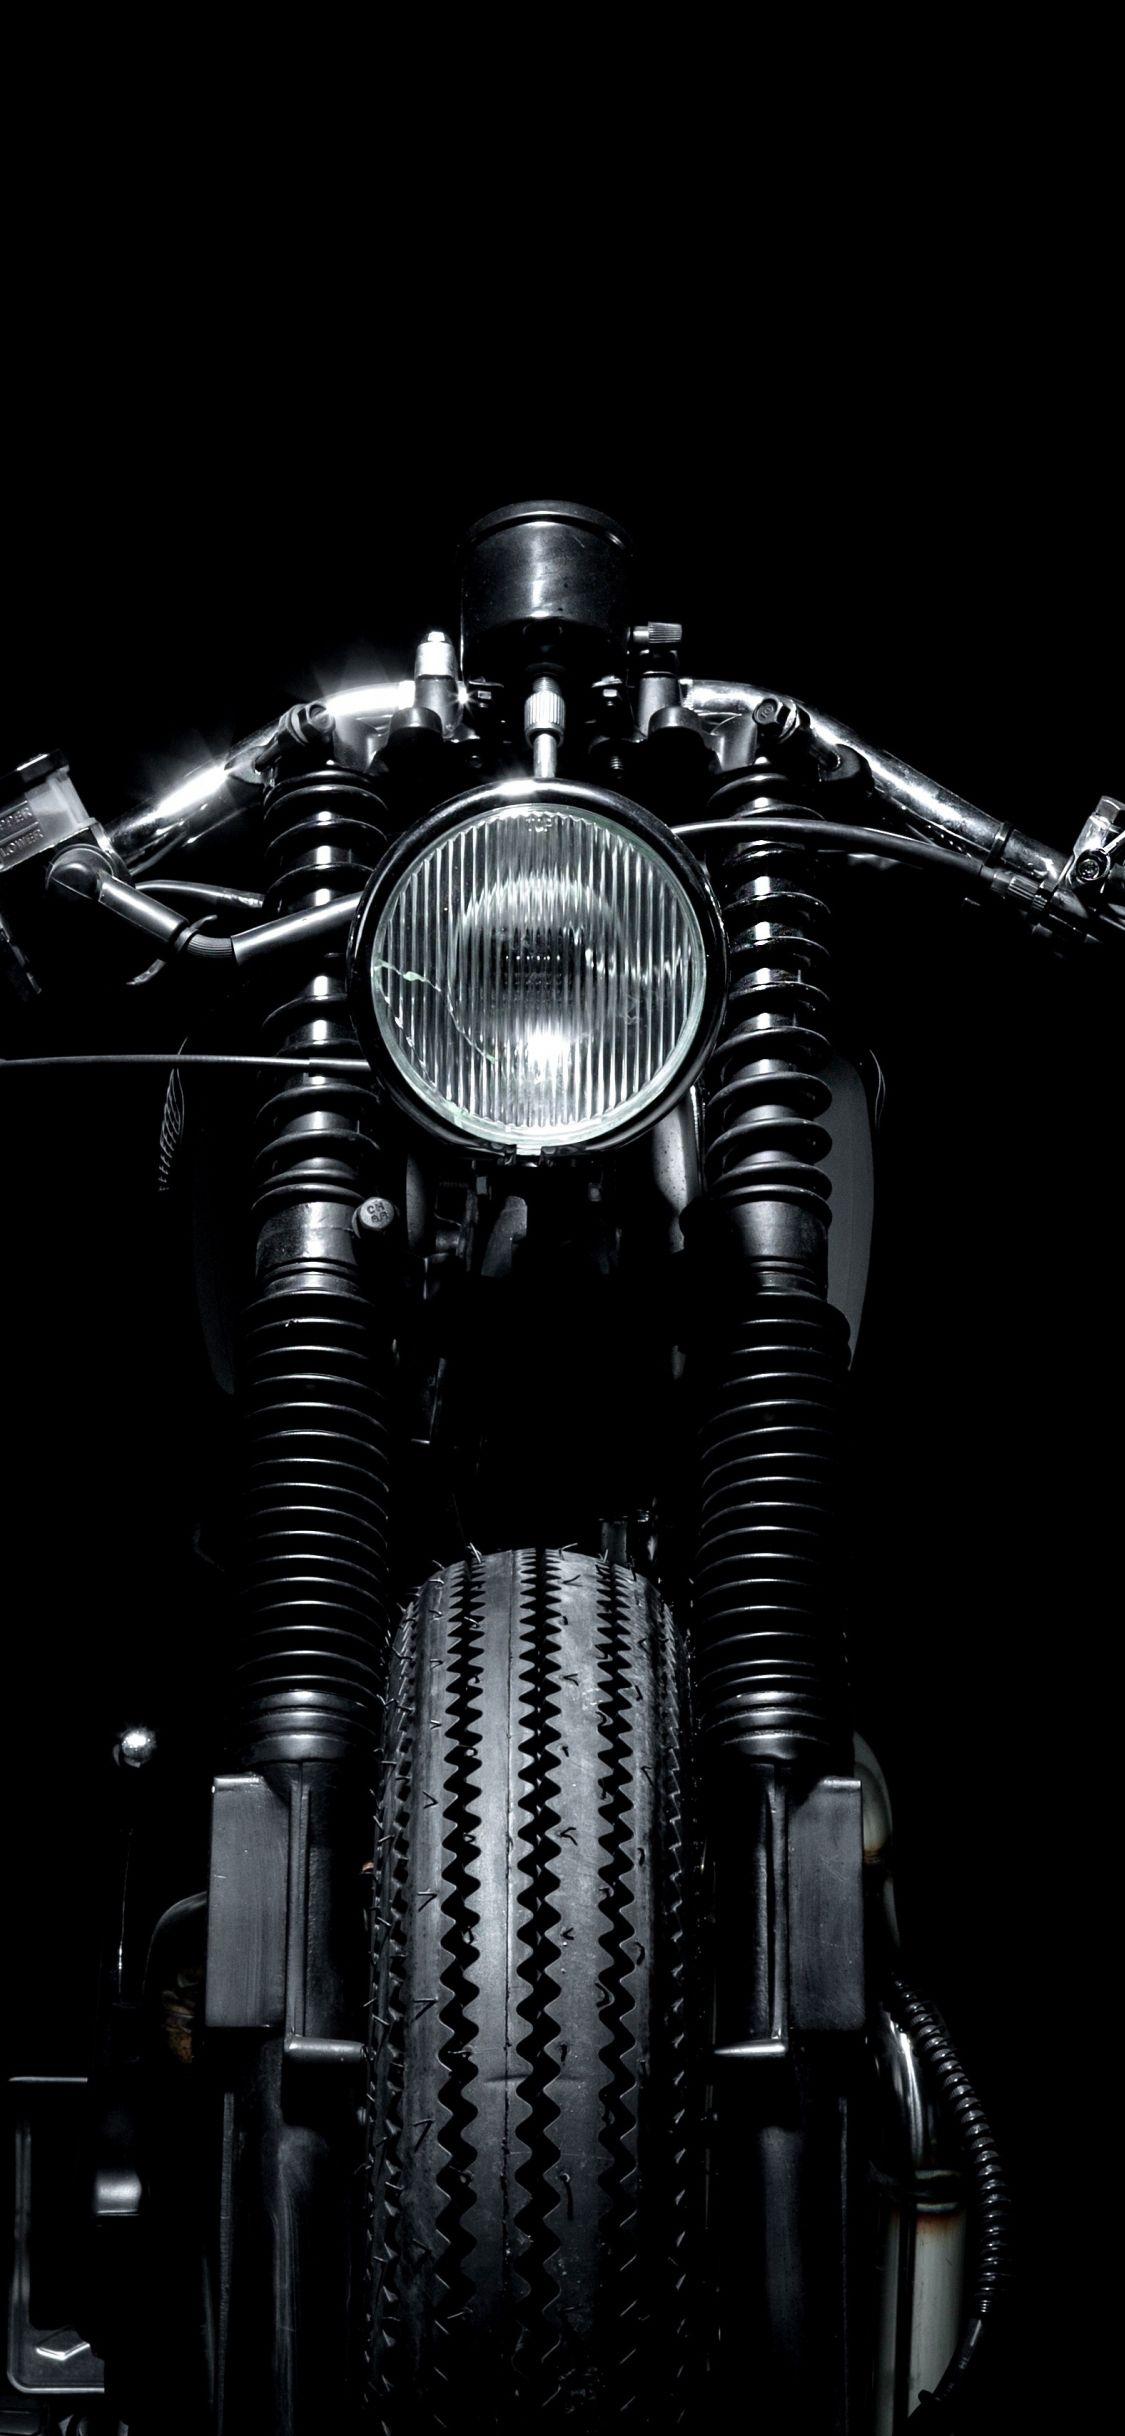 Dark Motorcycle Wallpapers - Top Free Dark Motorcycle Backgrounds